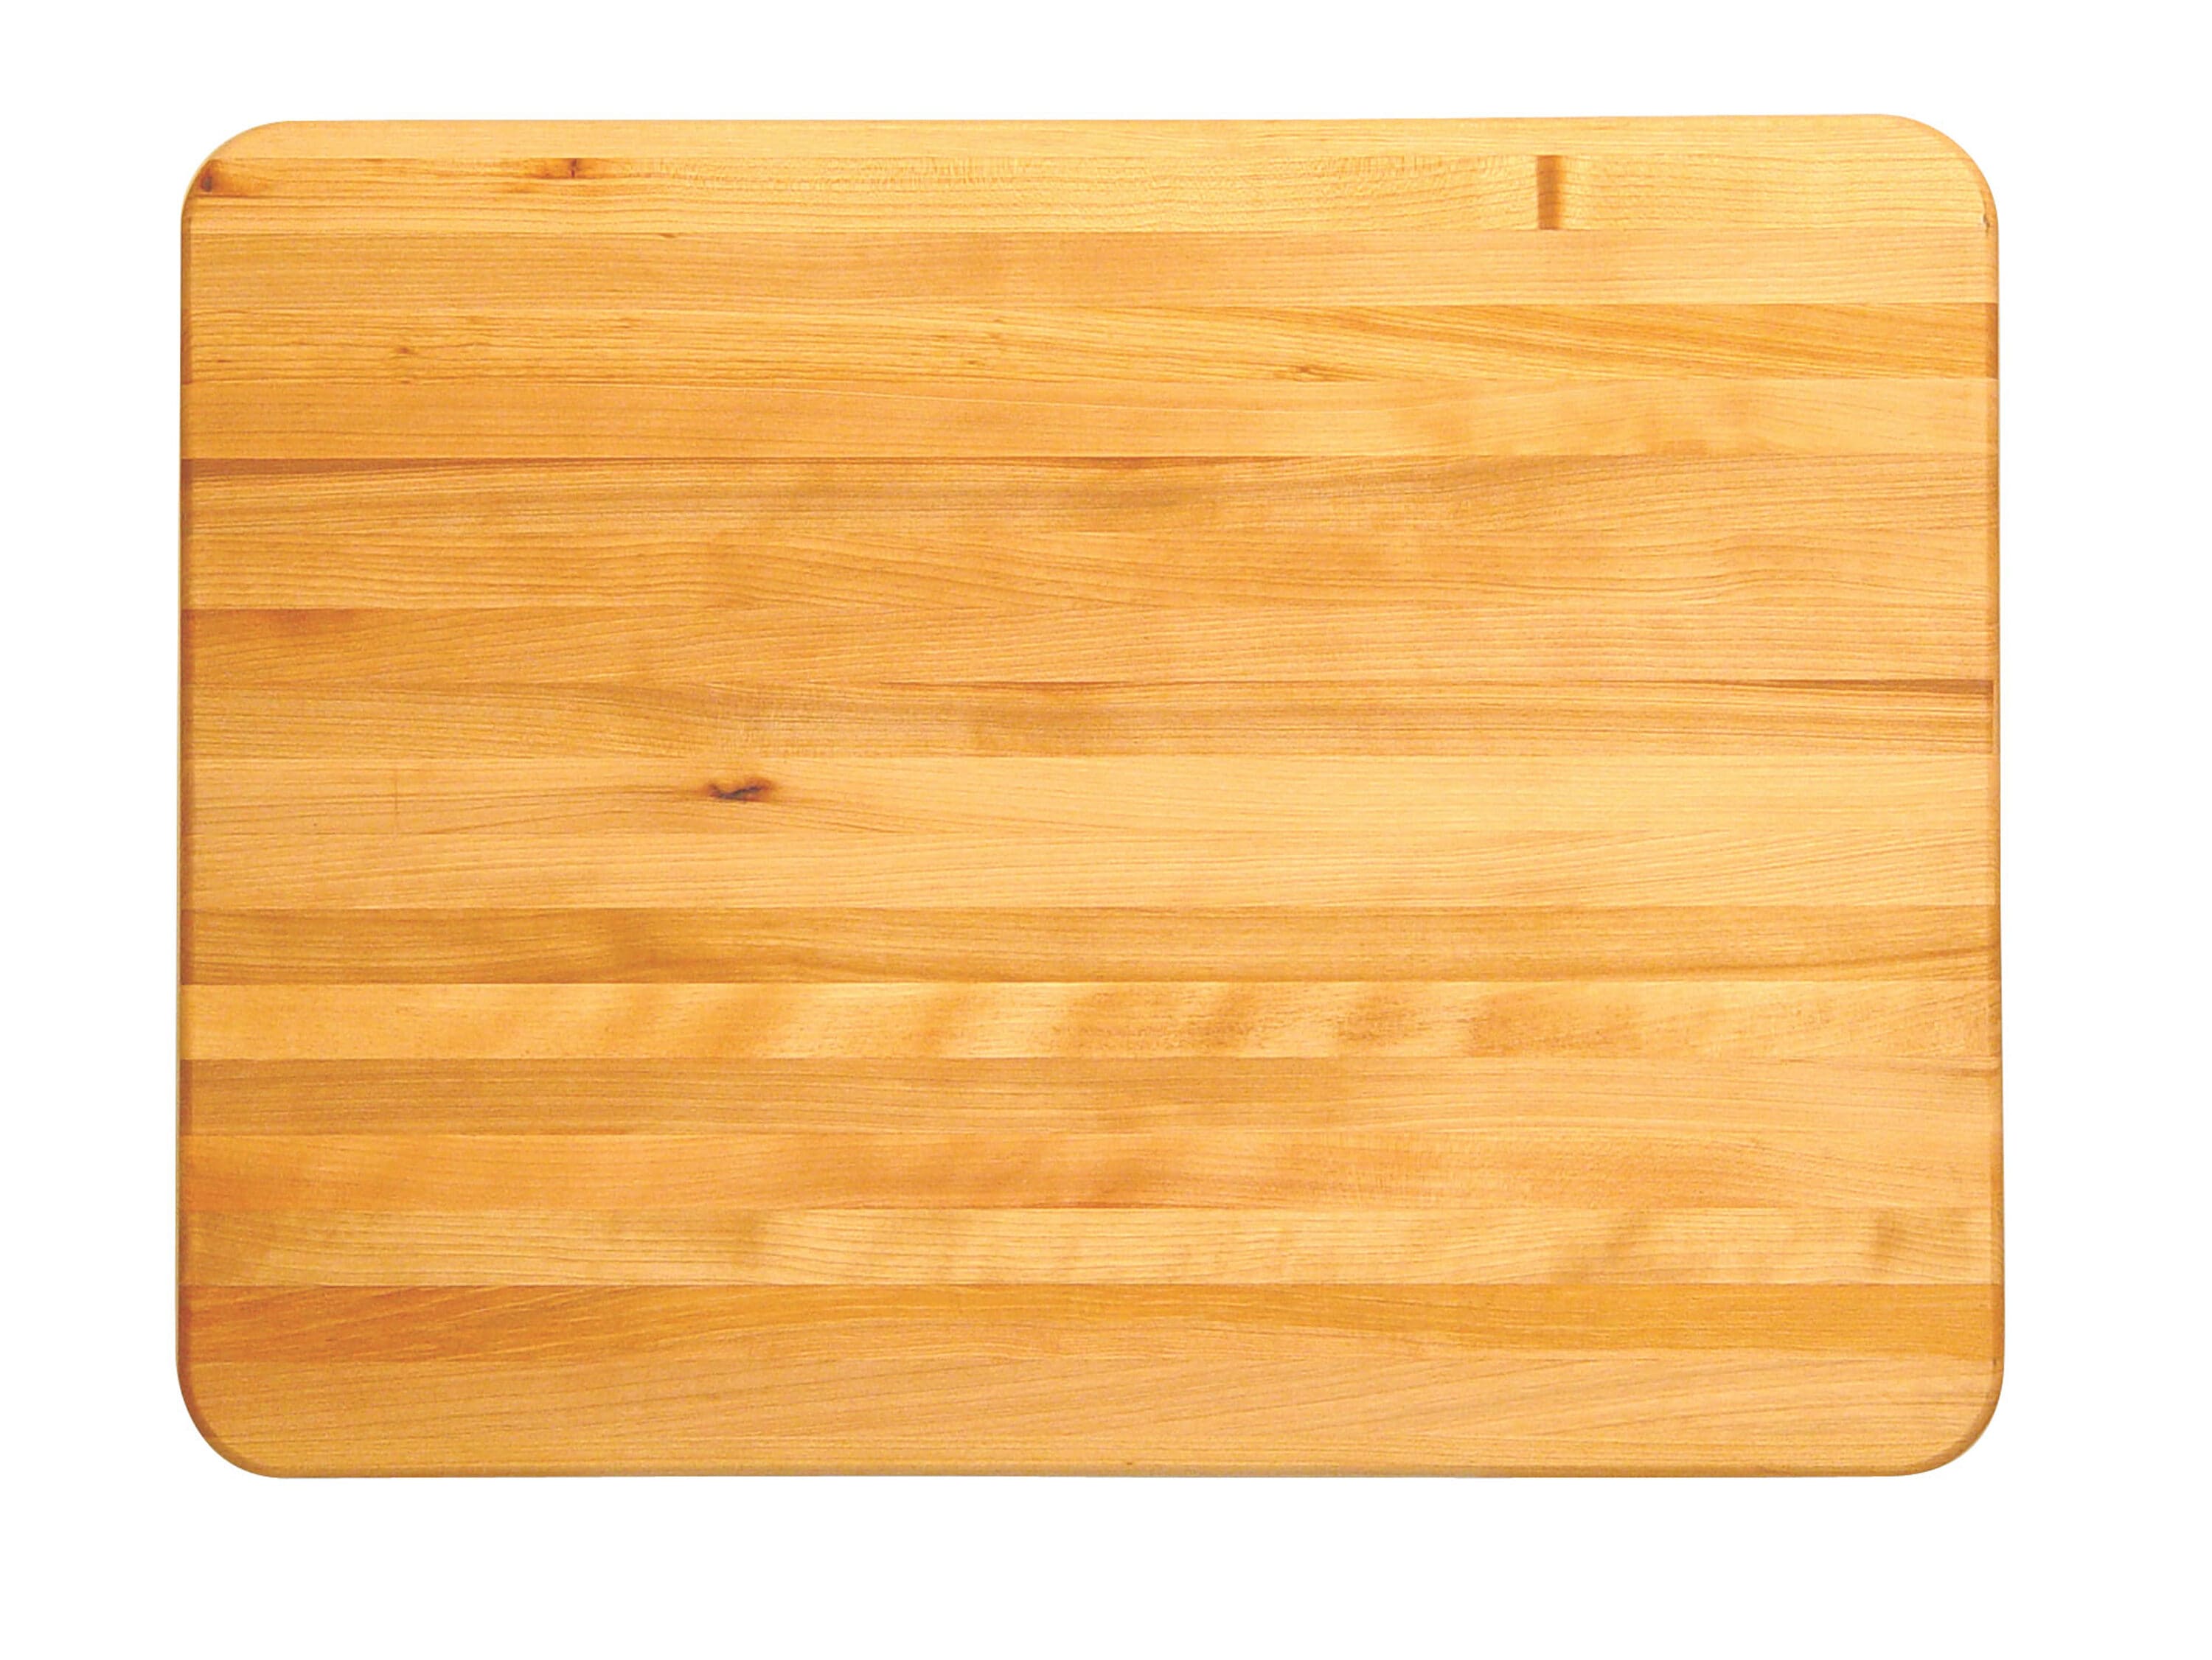 Stony - Perfect ECO friendly stone cutting boards